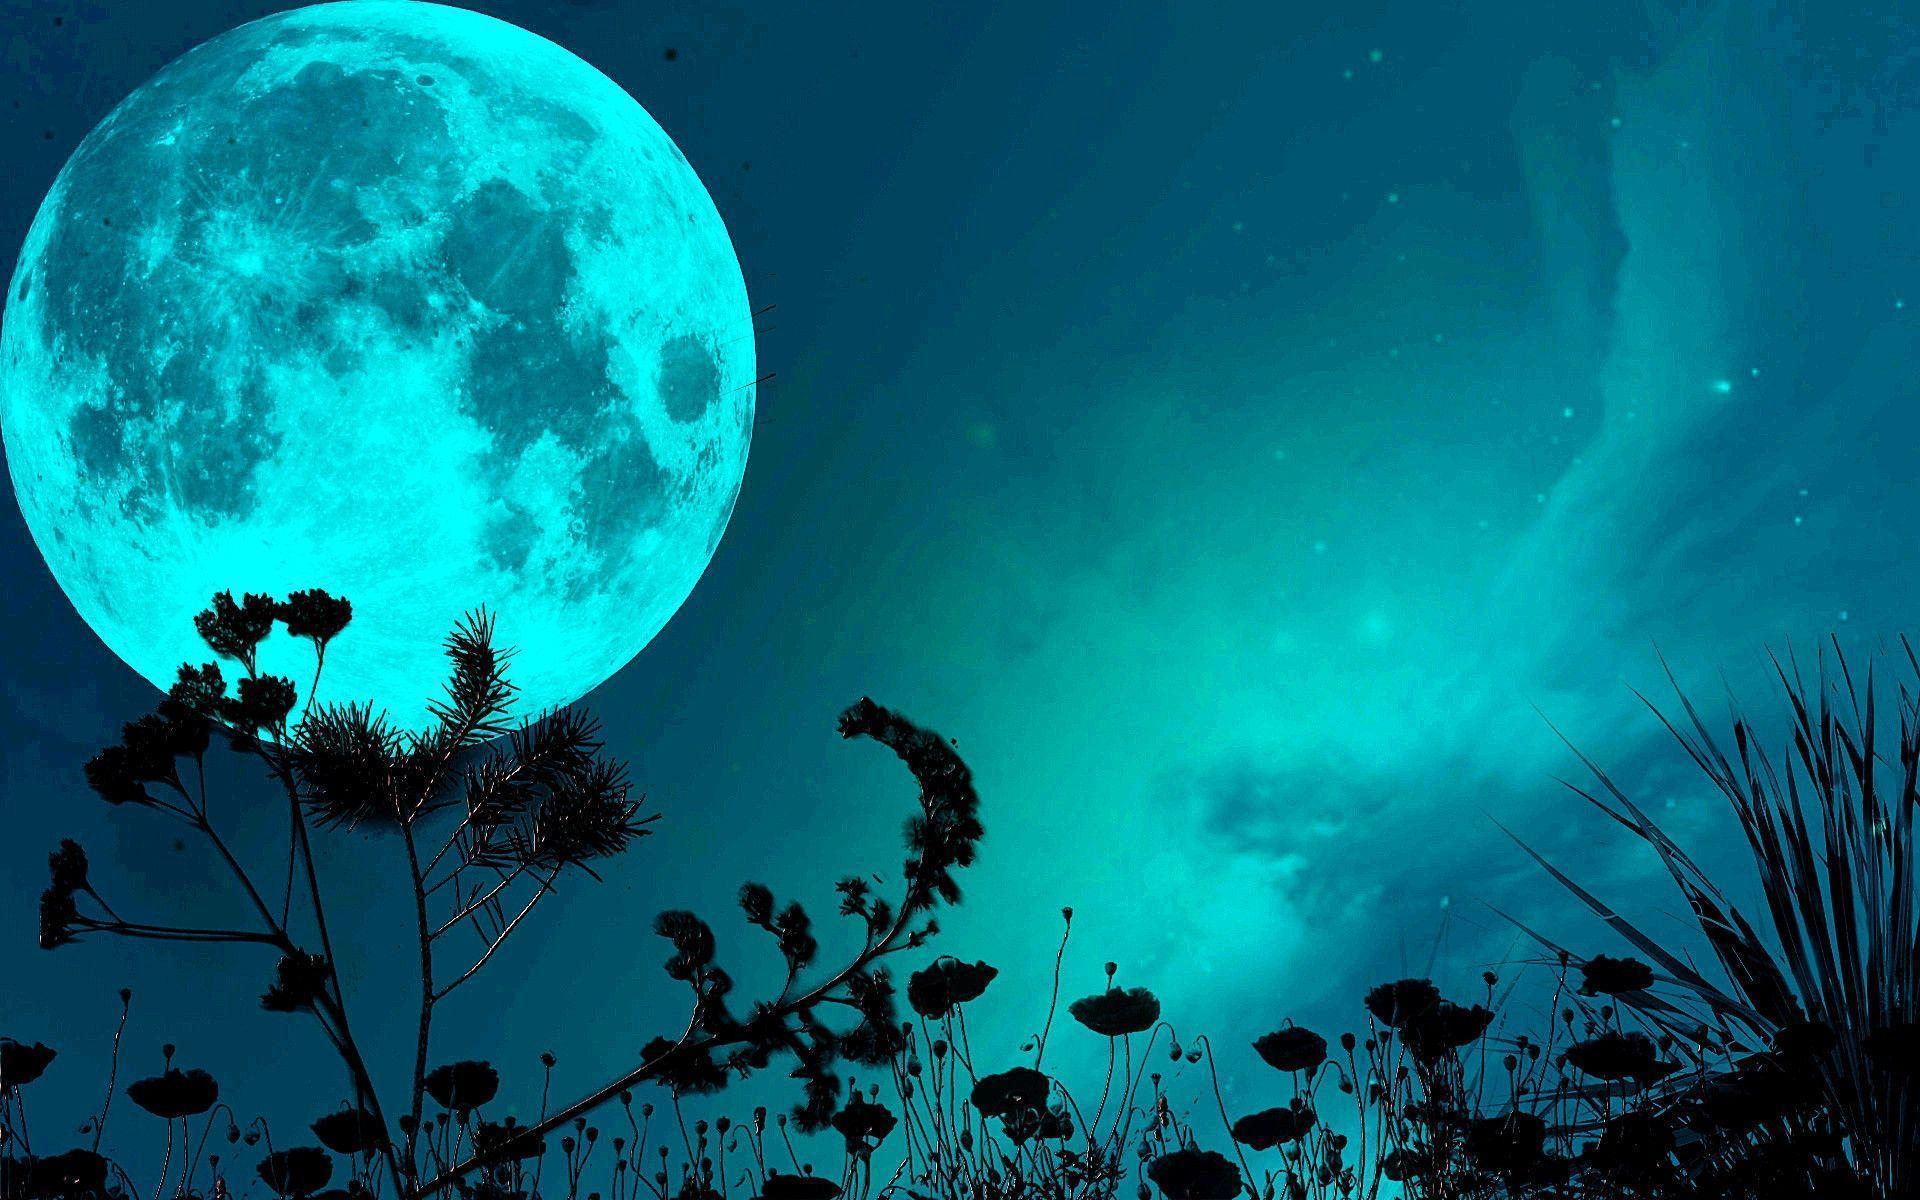 The blue moon HD Wallpaper